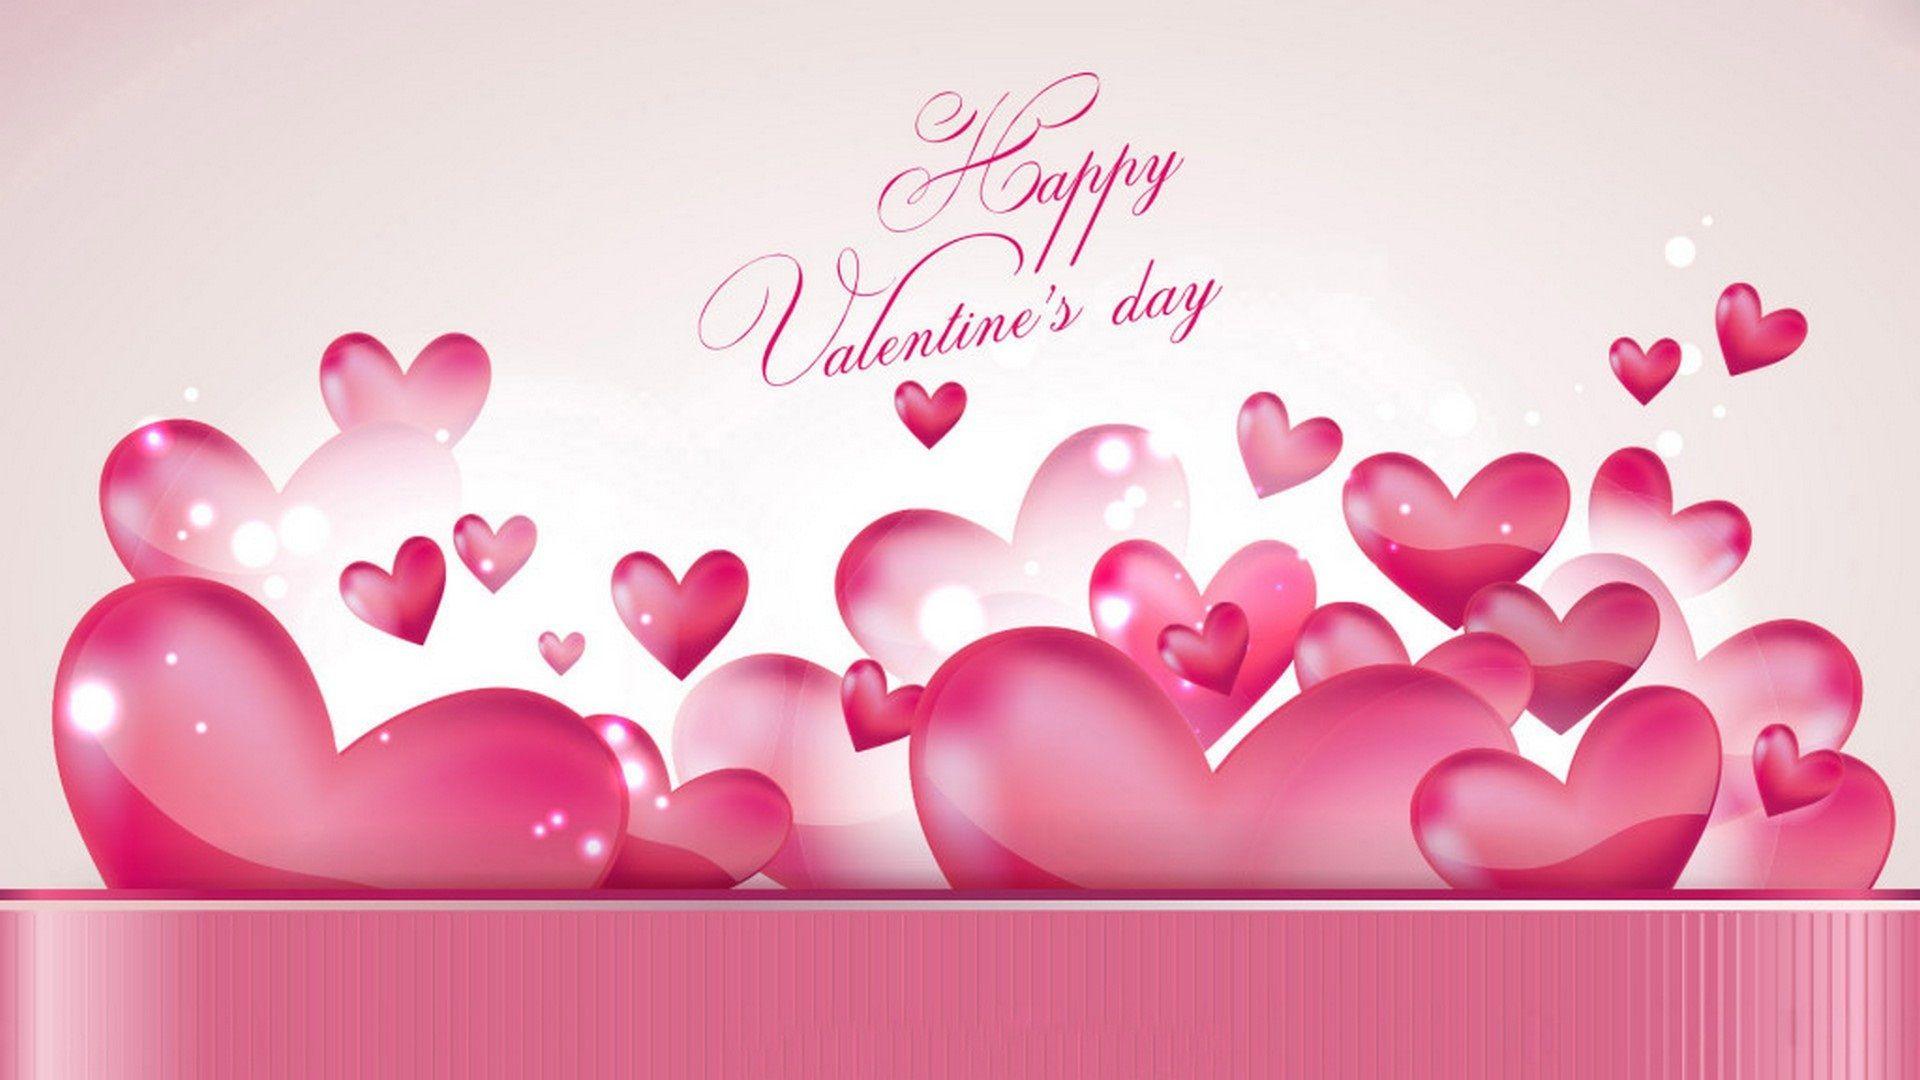 Valentine Wallpaper Border. Happy valentines day image